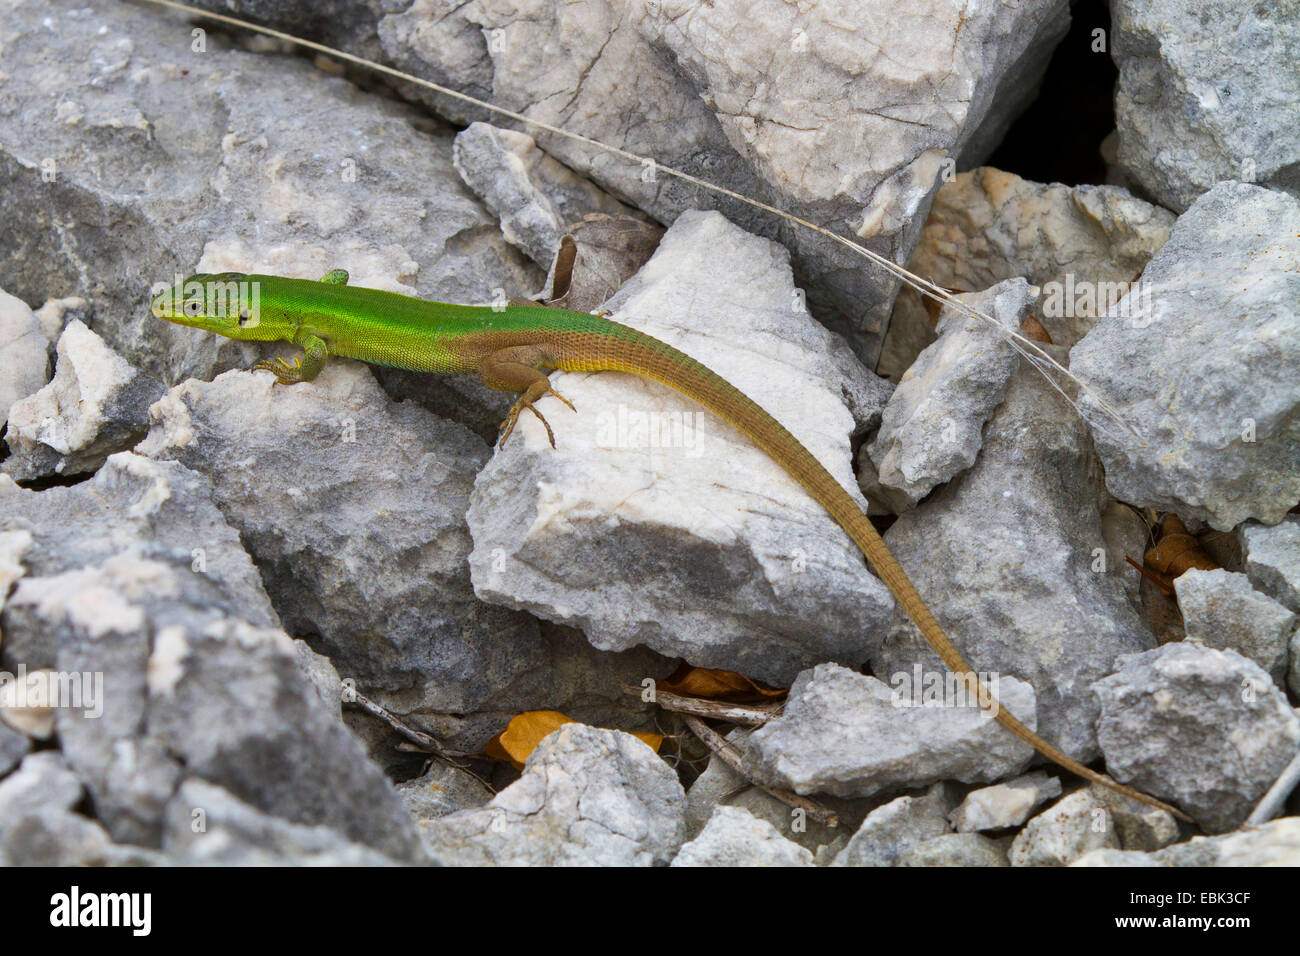 Dalmatian wall lizard (Podarcis melisellensis fiumana, Lacerta melisellensis fiumana), on gravely ground, Croatia, Istria Stock Photo